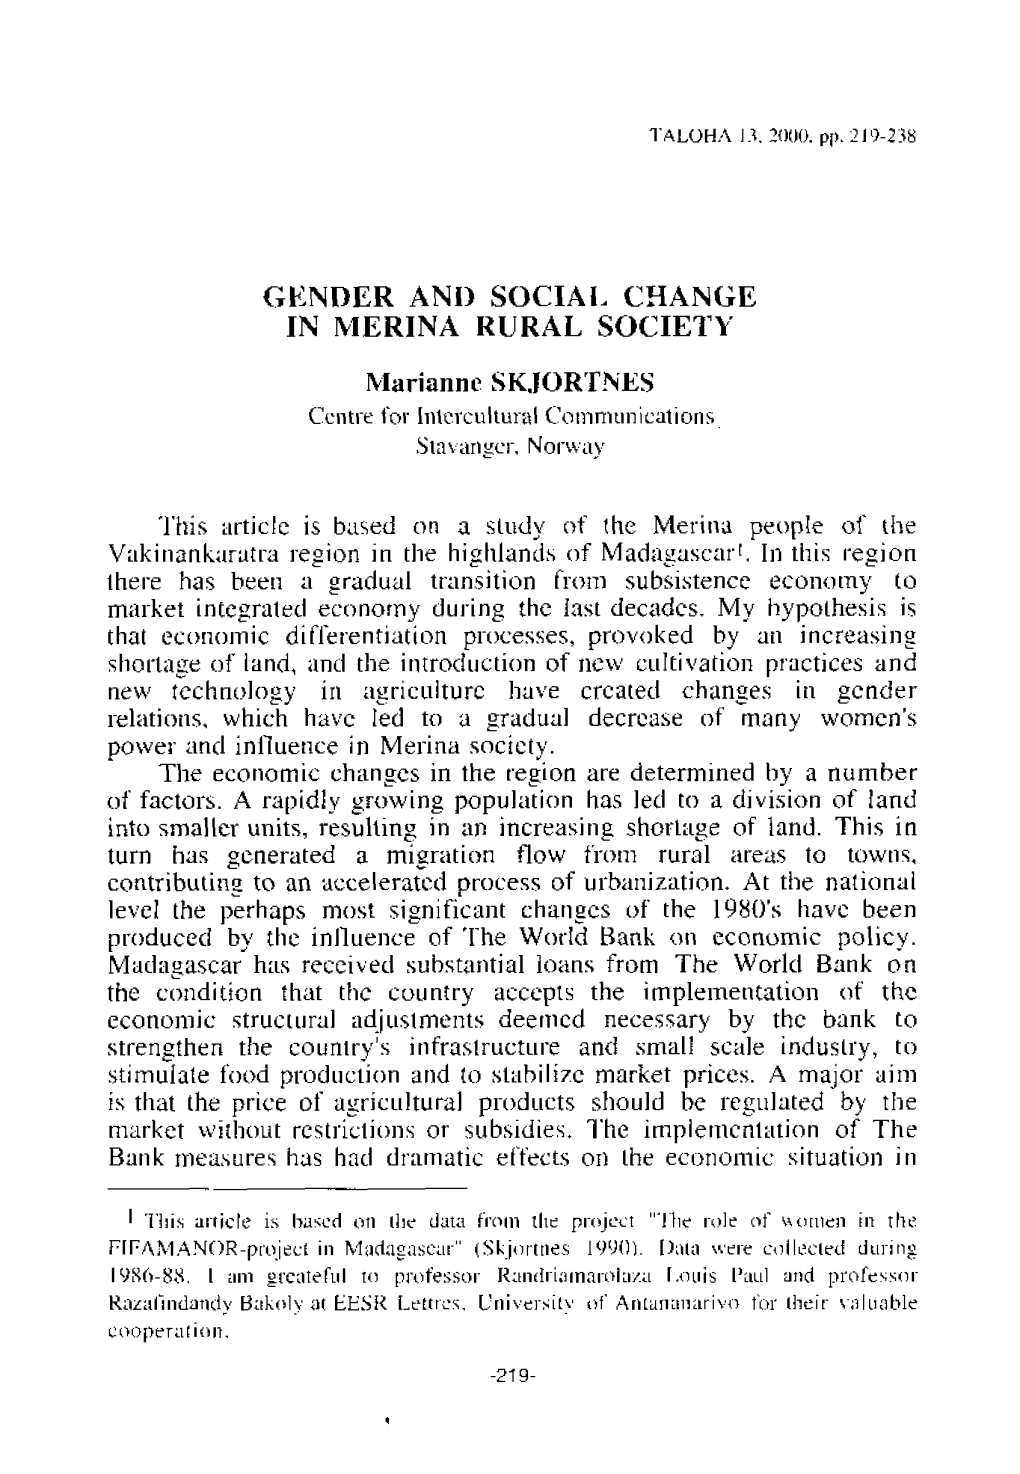 GENDER AN13 SOCIAL CIIANGE in Merlna RURAL SOCIETY